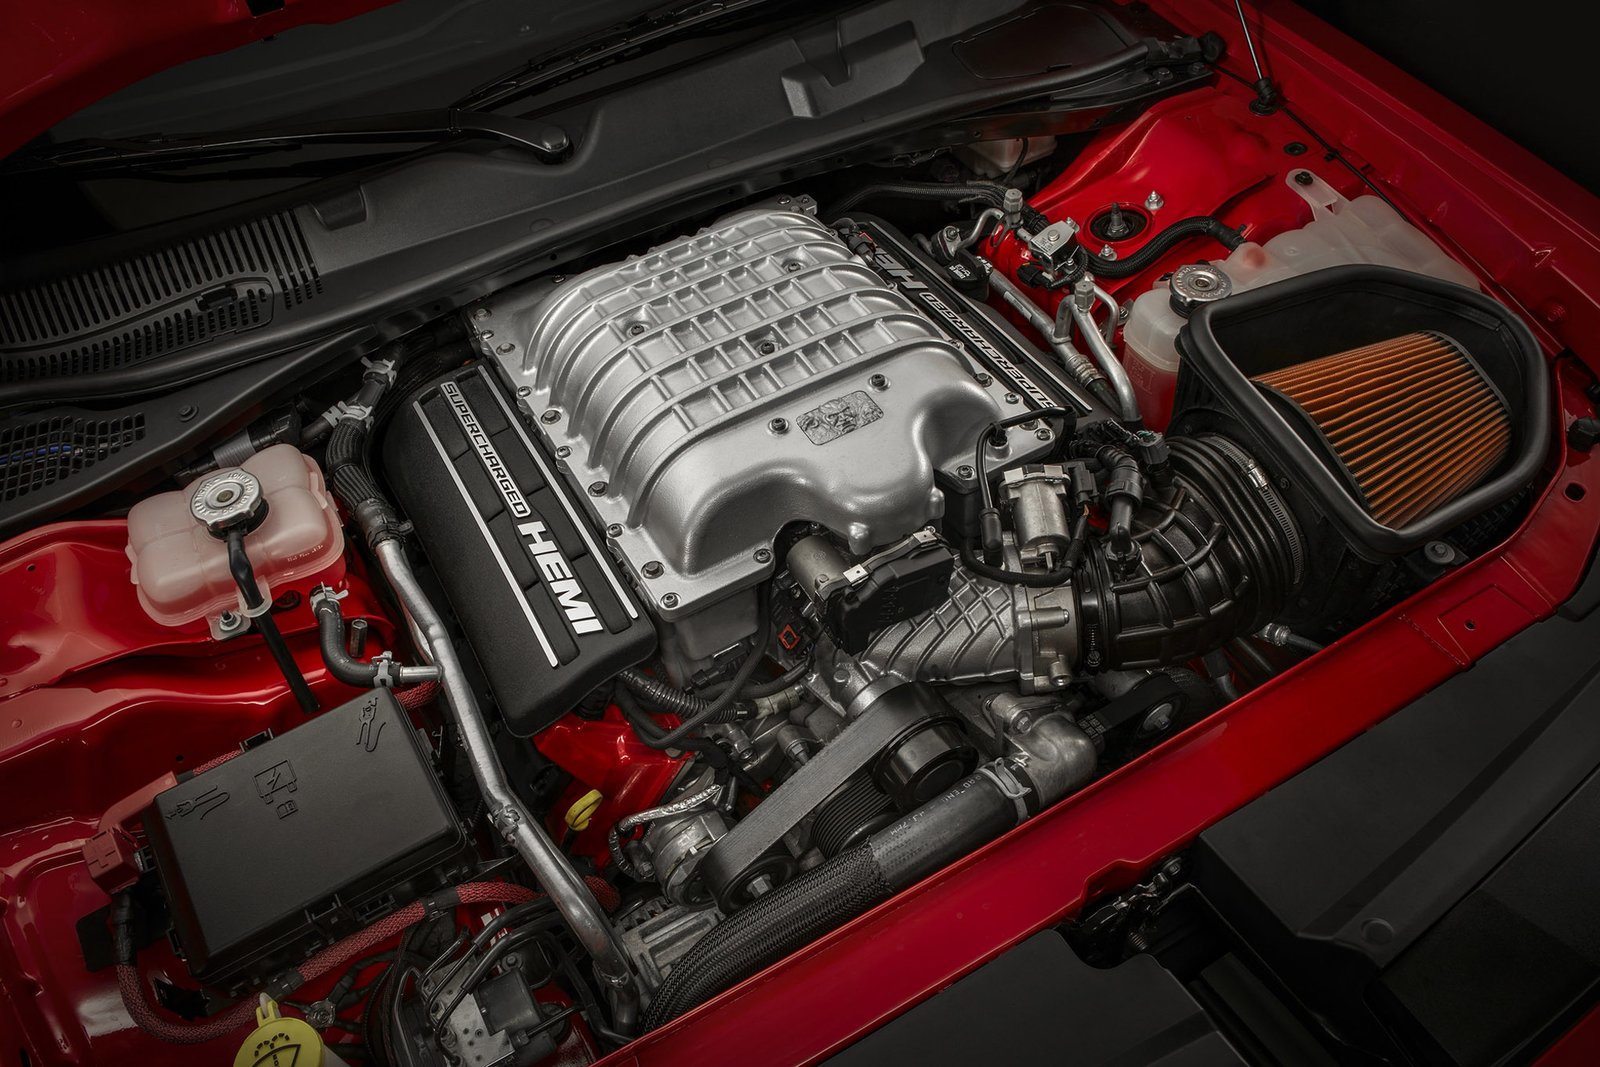 Under the hood of the 2018 Dodge Challenger SRT Demon is a Super